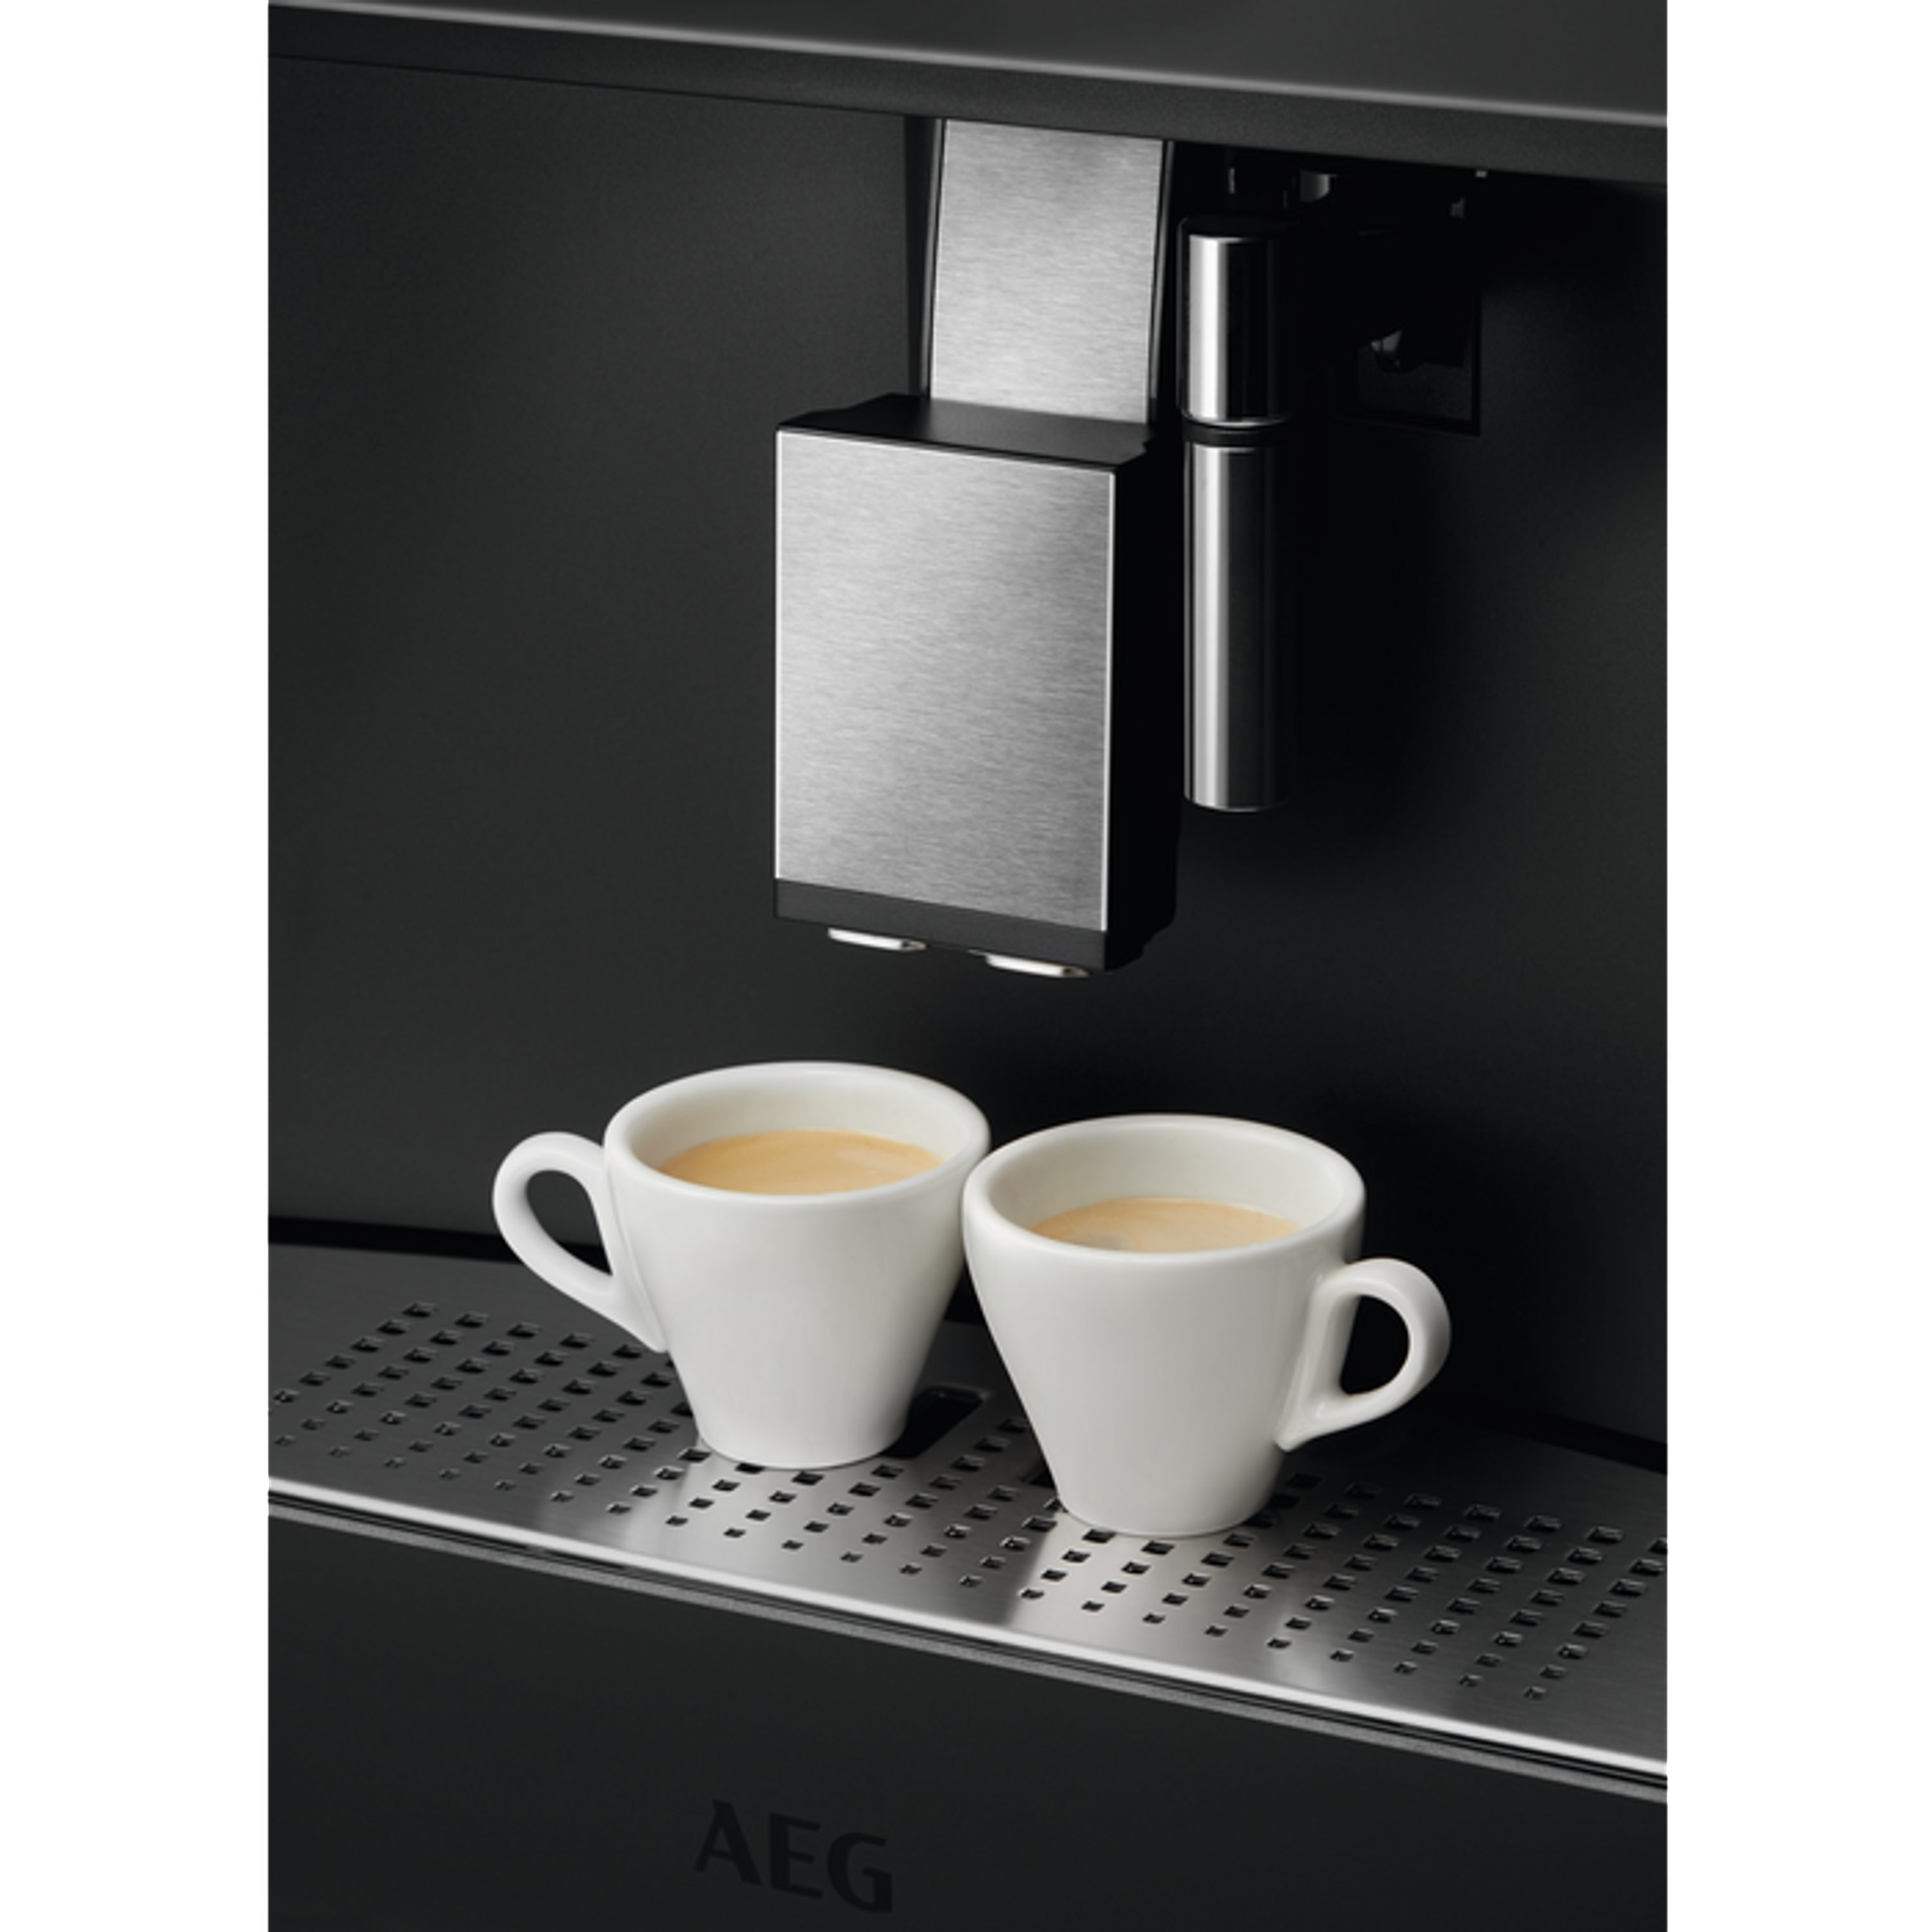 AEG Einbau-Kaffeevollautomat und KKA894500T, Black, Latte-Macchiato Matt Cappuccino-Funktion